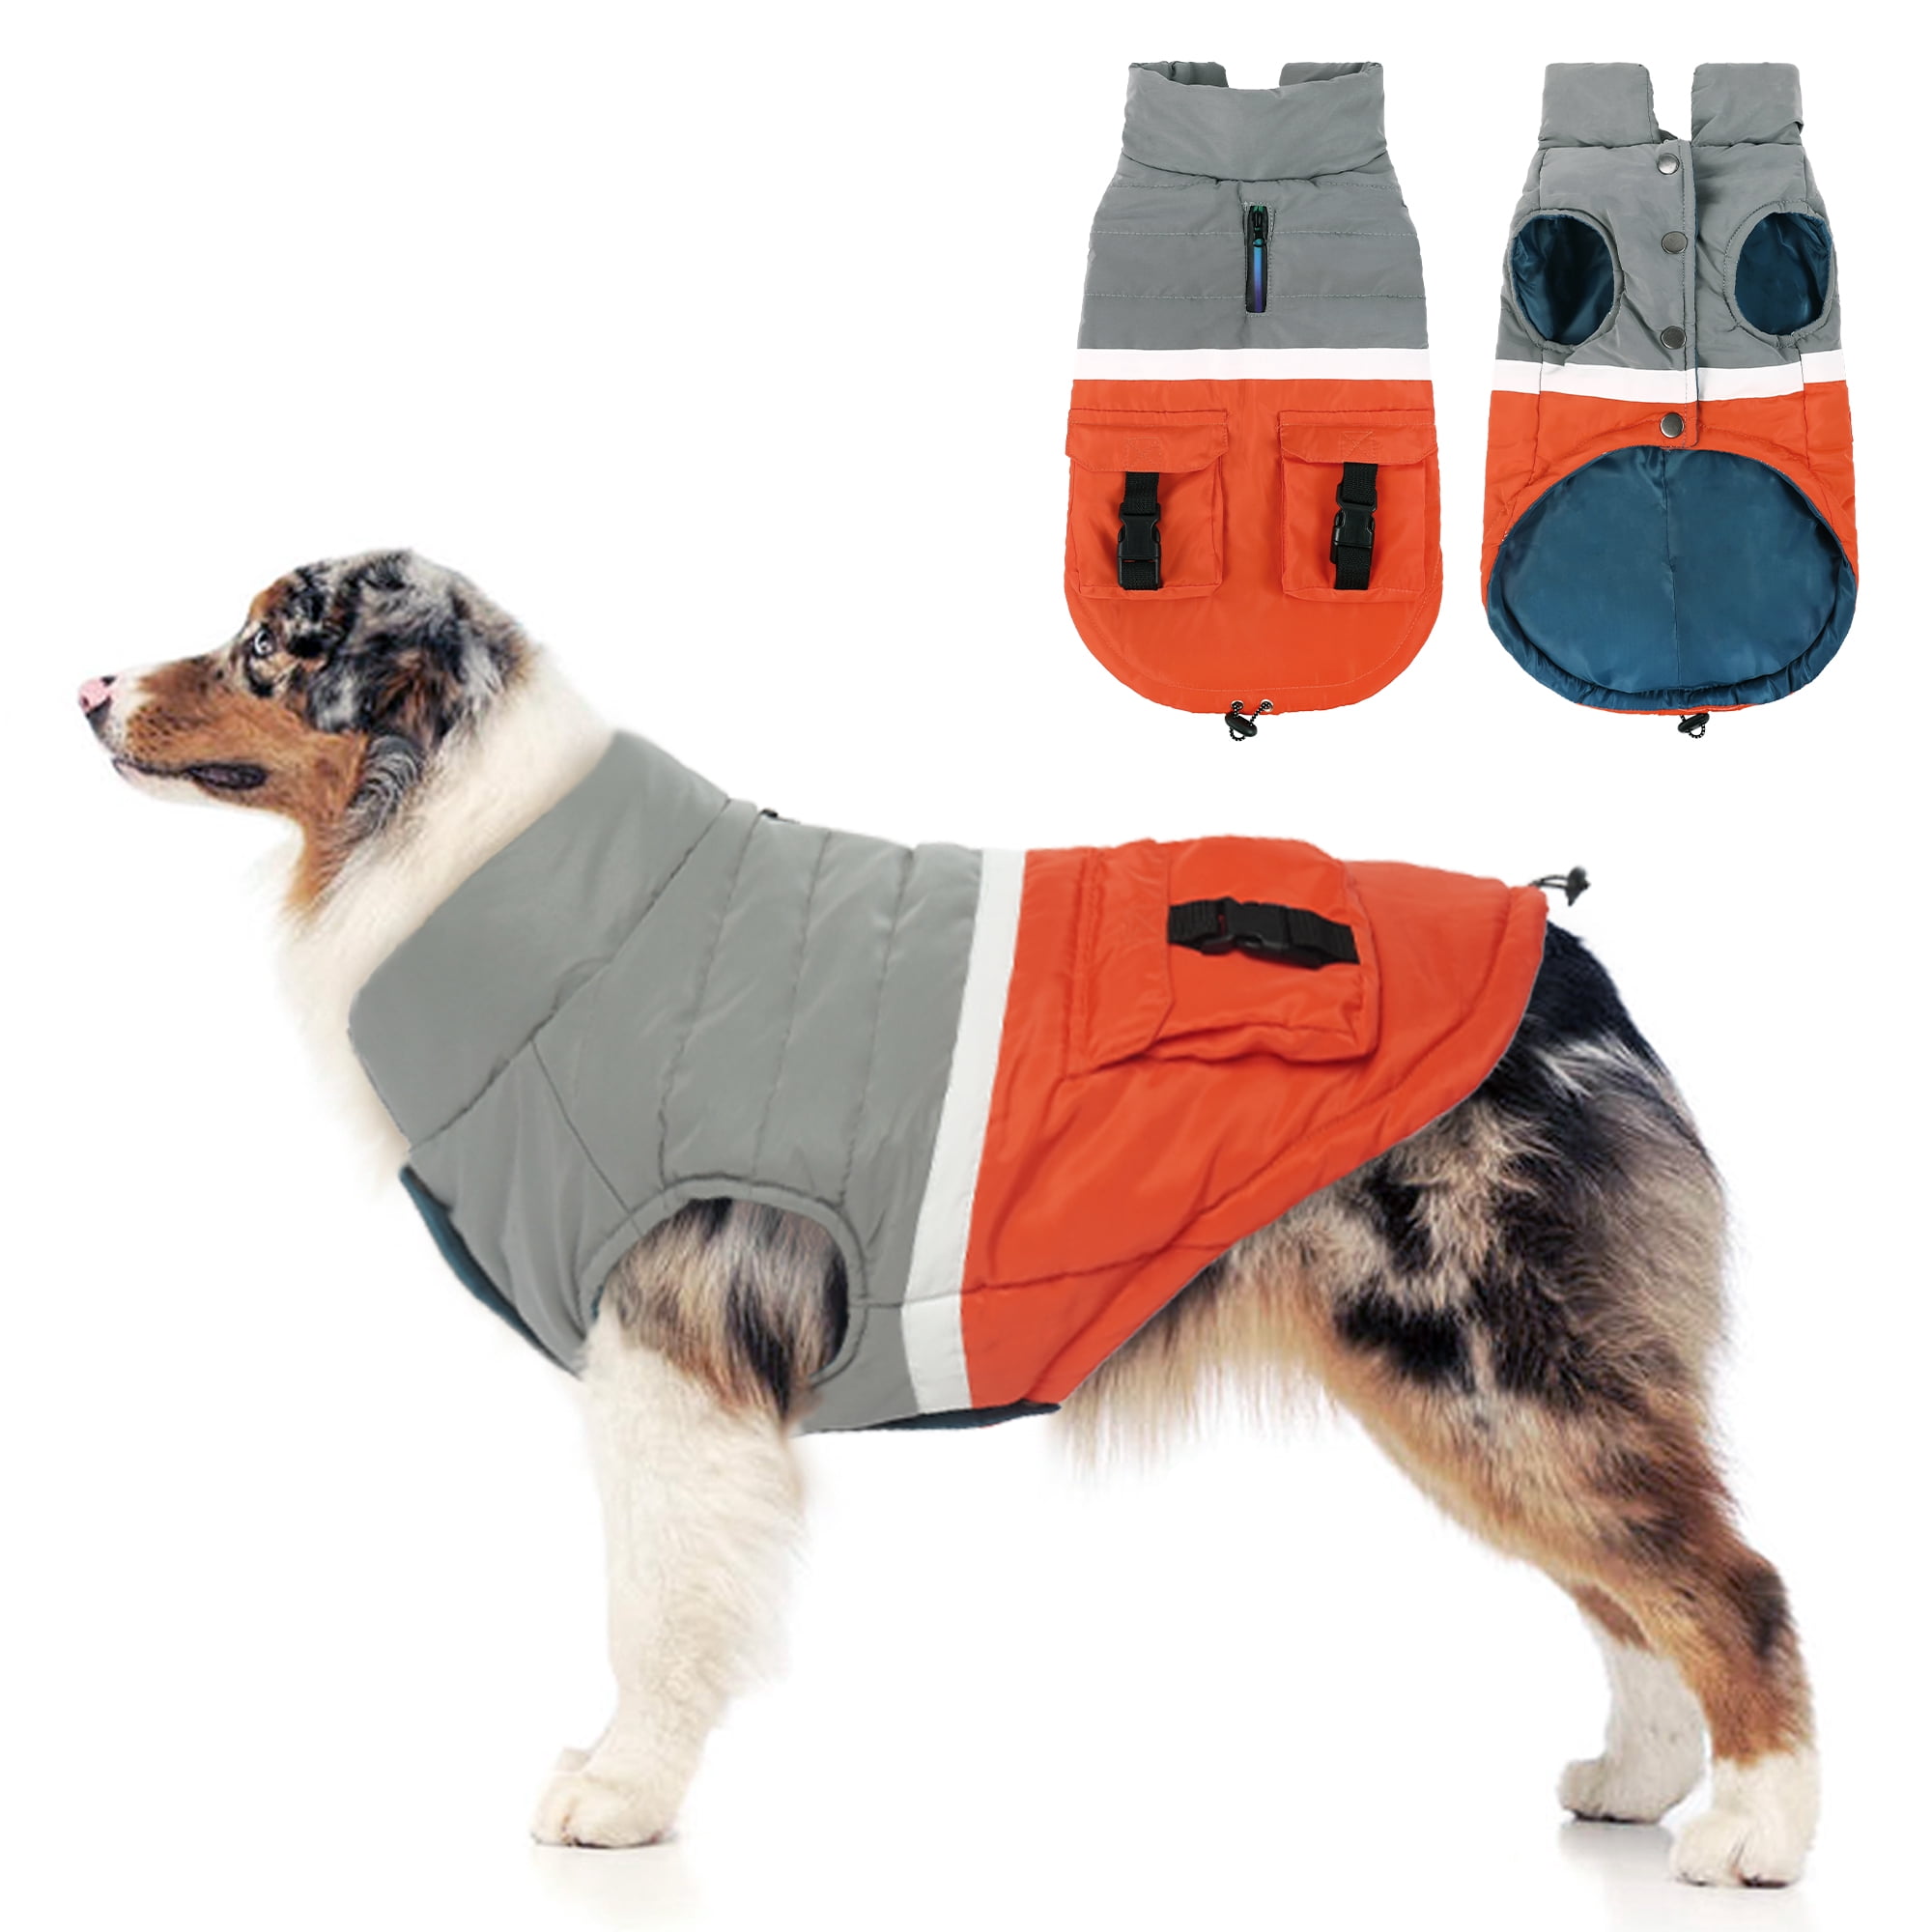  PUMYPOREITY Dog Dress, Dog Clothes for Small Dogs,Dog